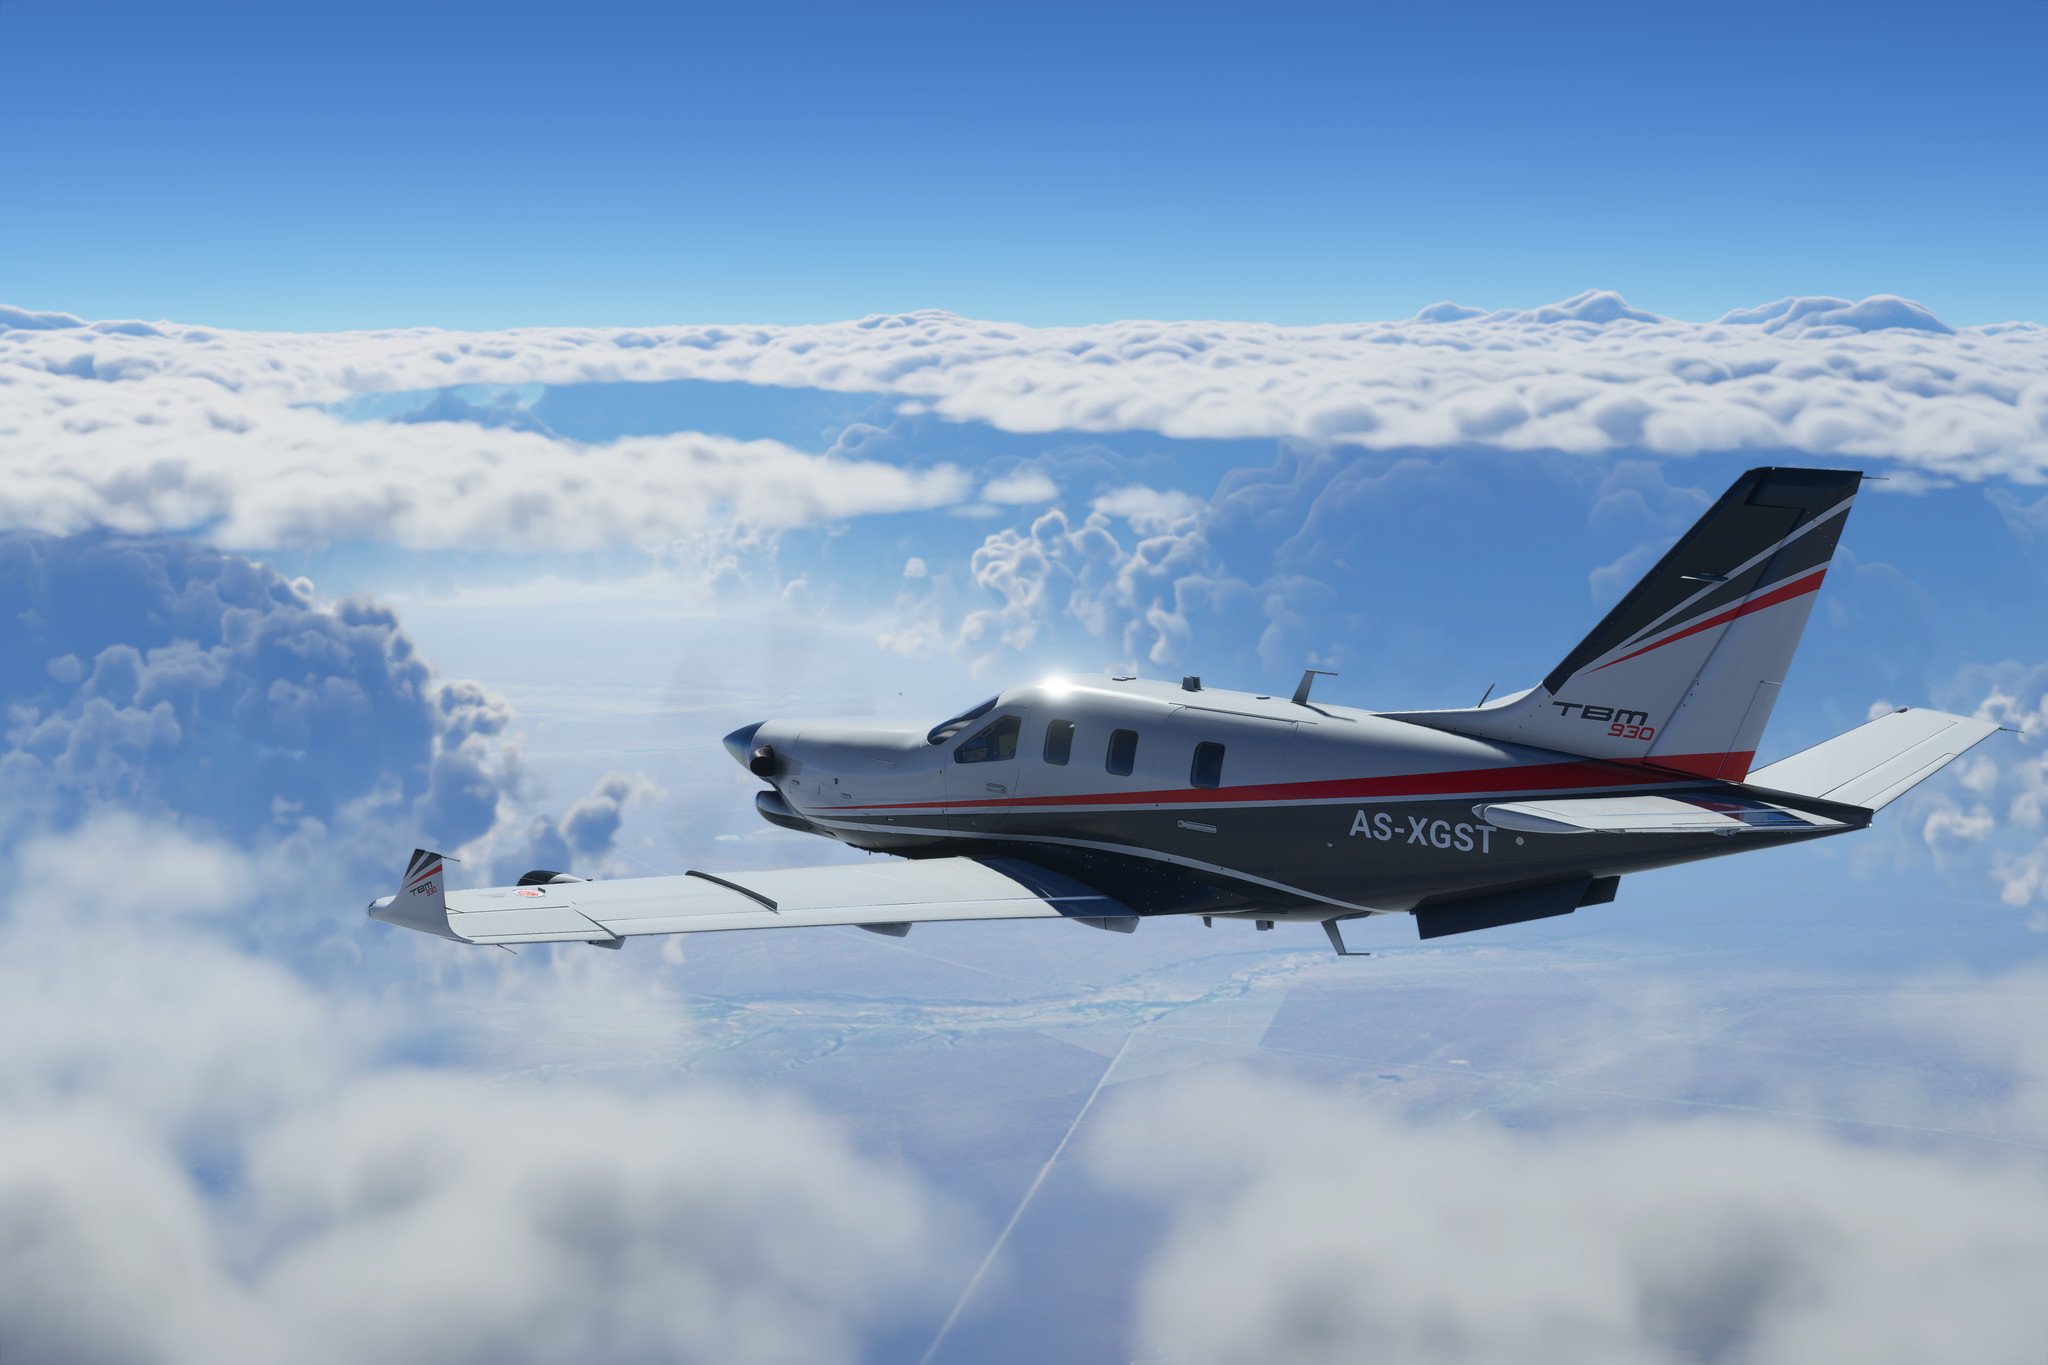 Flight Simulator 2020 Aircraft: List with data & editions